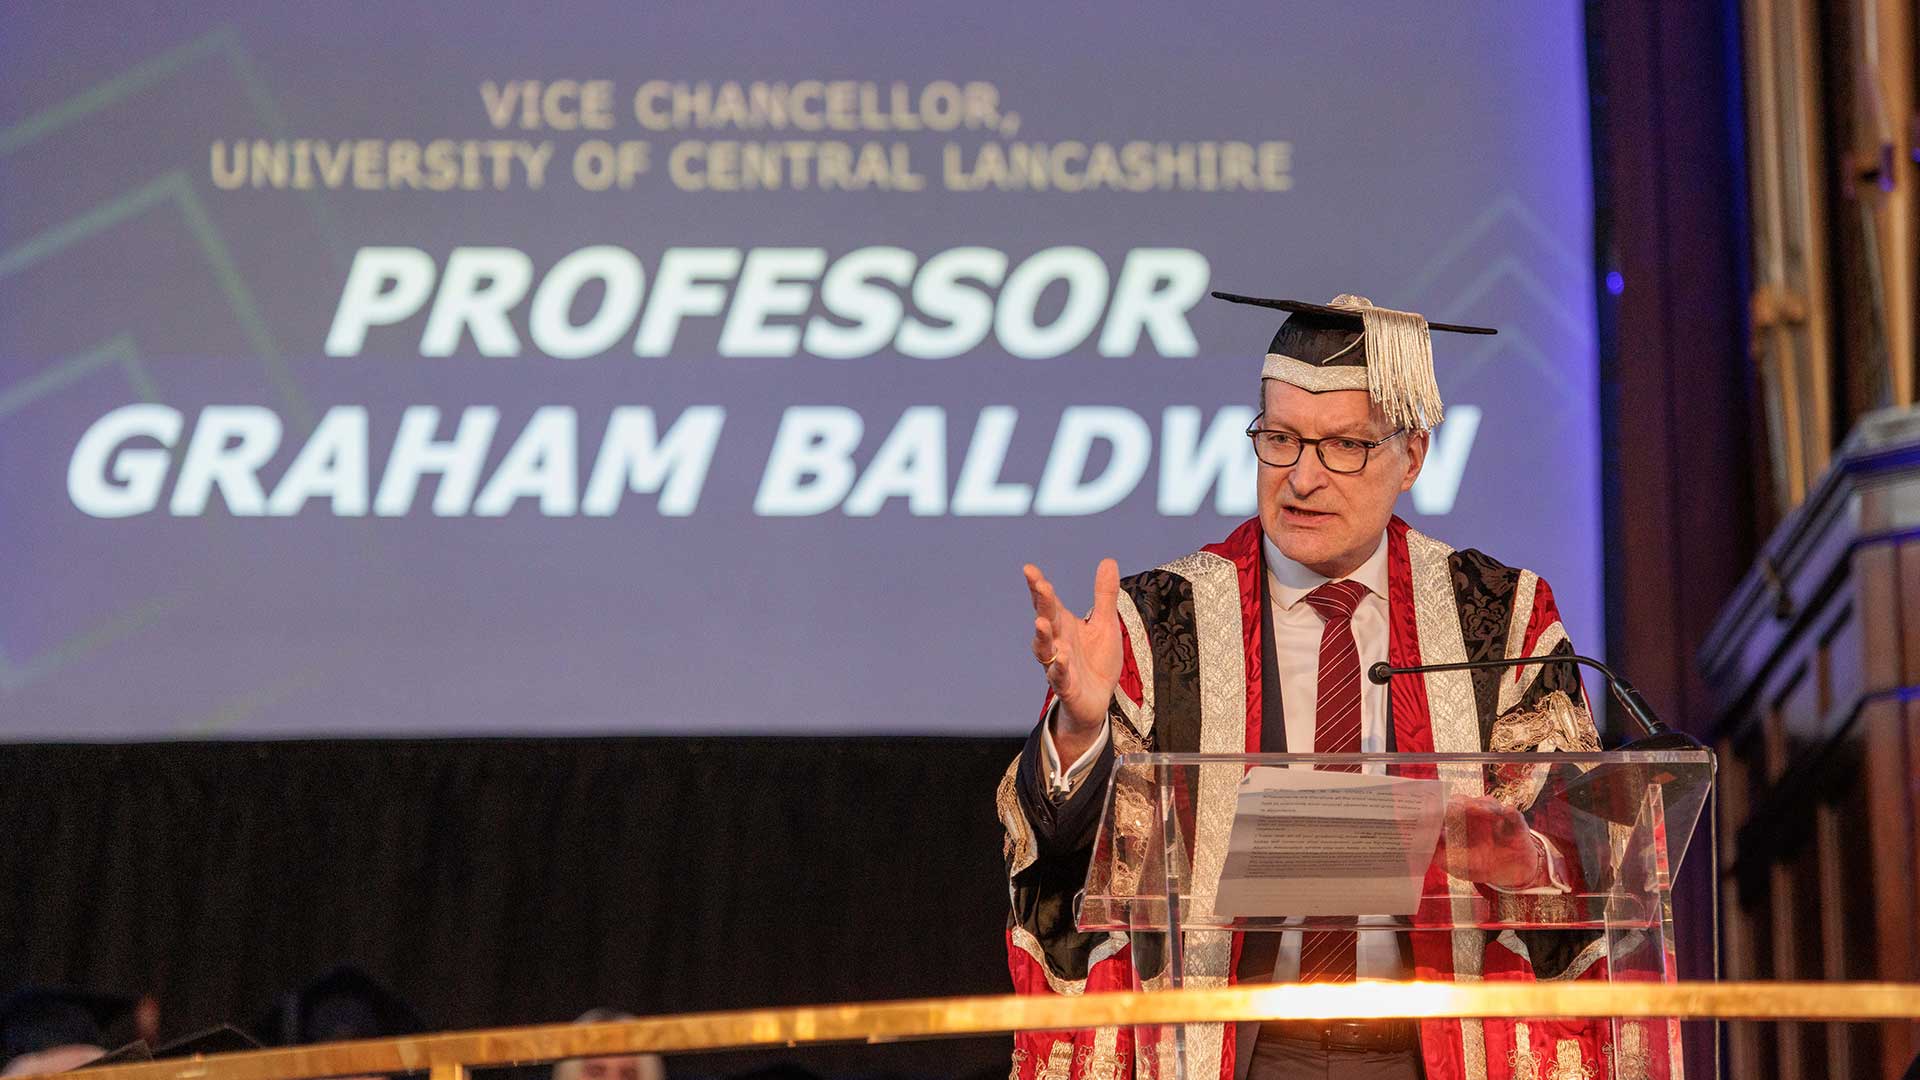 Hugh Baird lecturerer presenting at a graduation